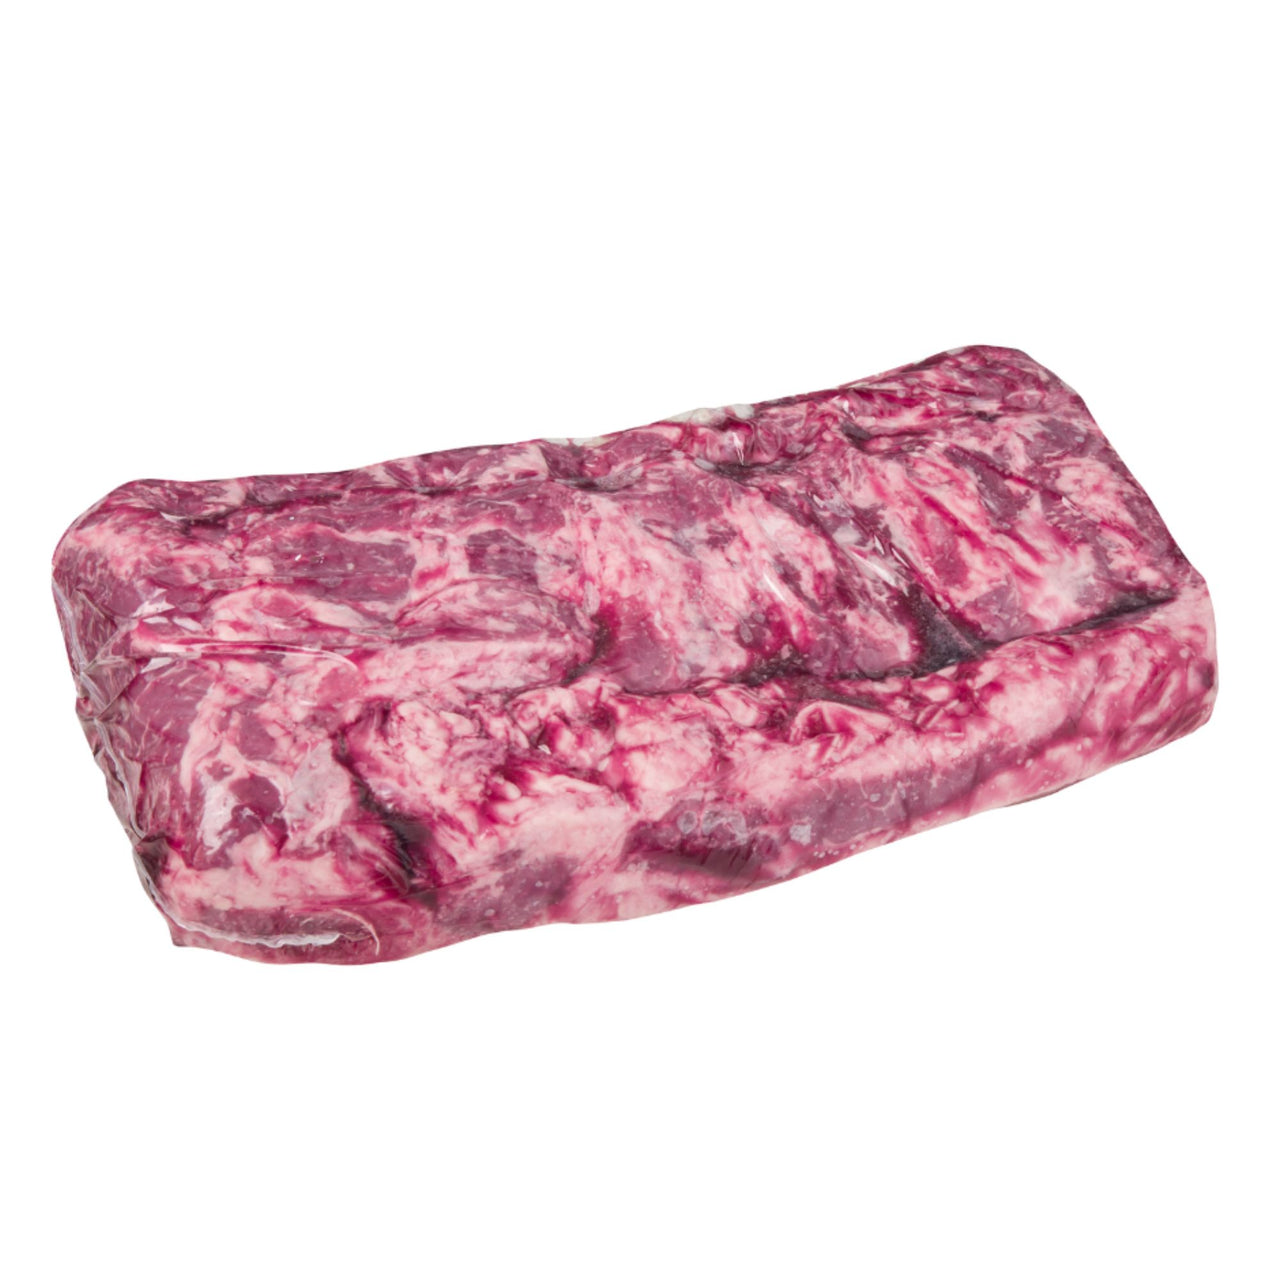 Image of AA Boneless Whole Beef Striploin - 1 x 6.5 Kilos